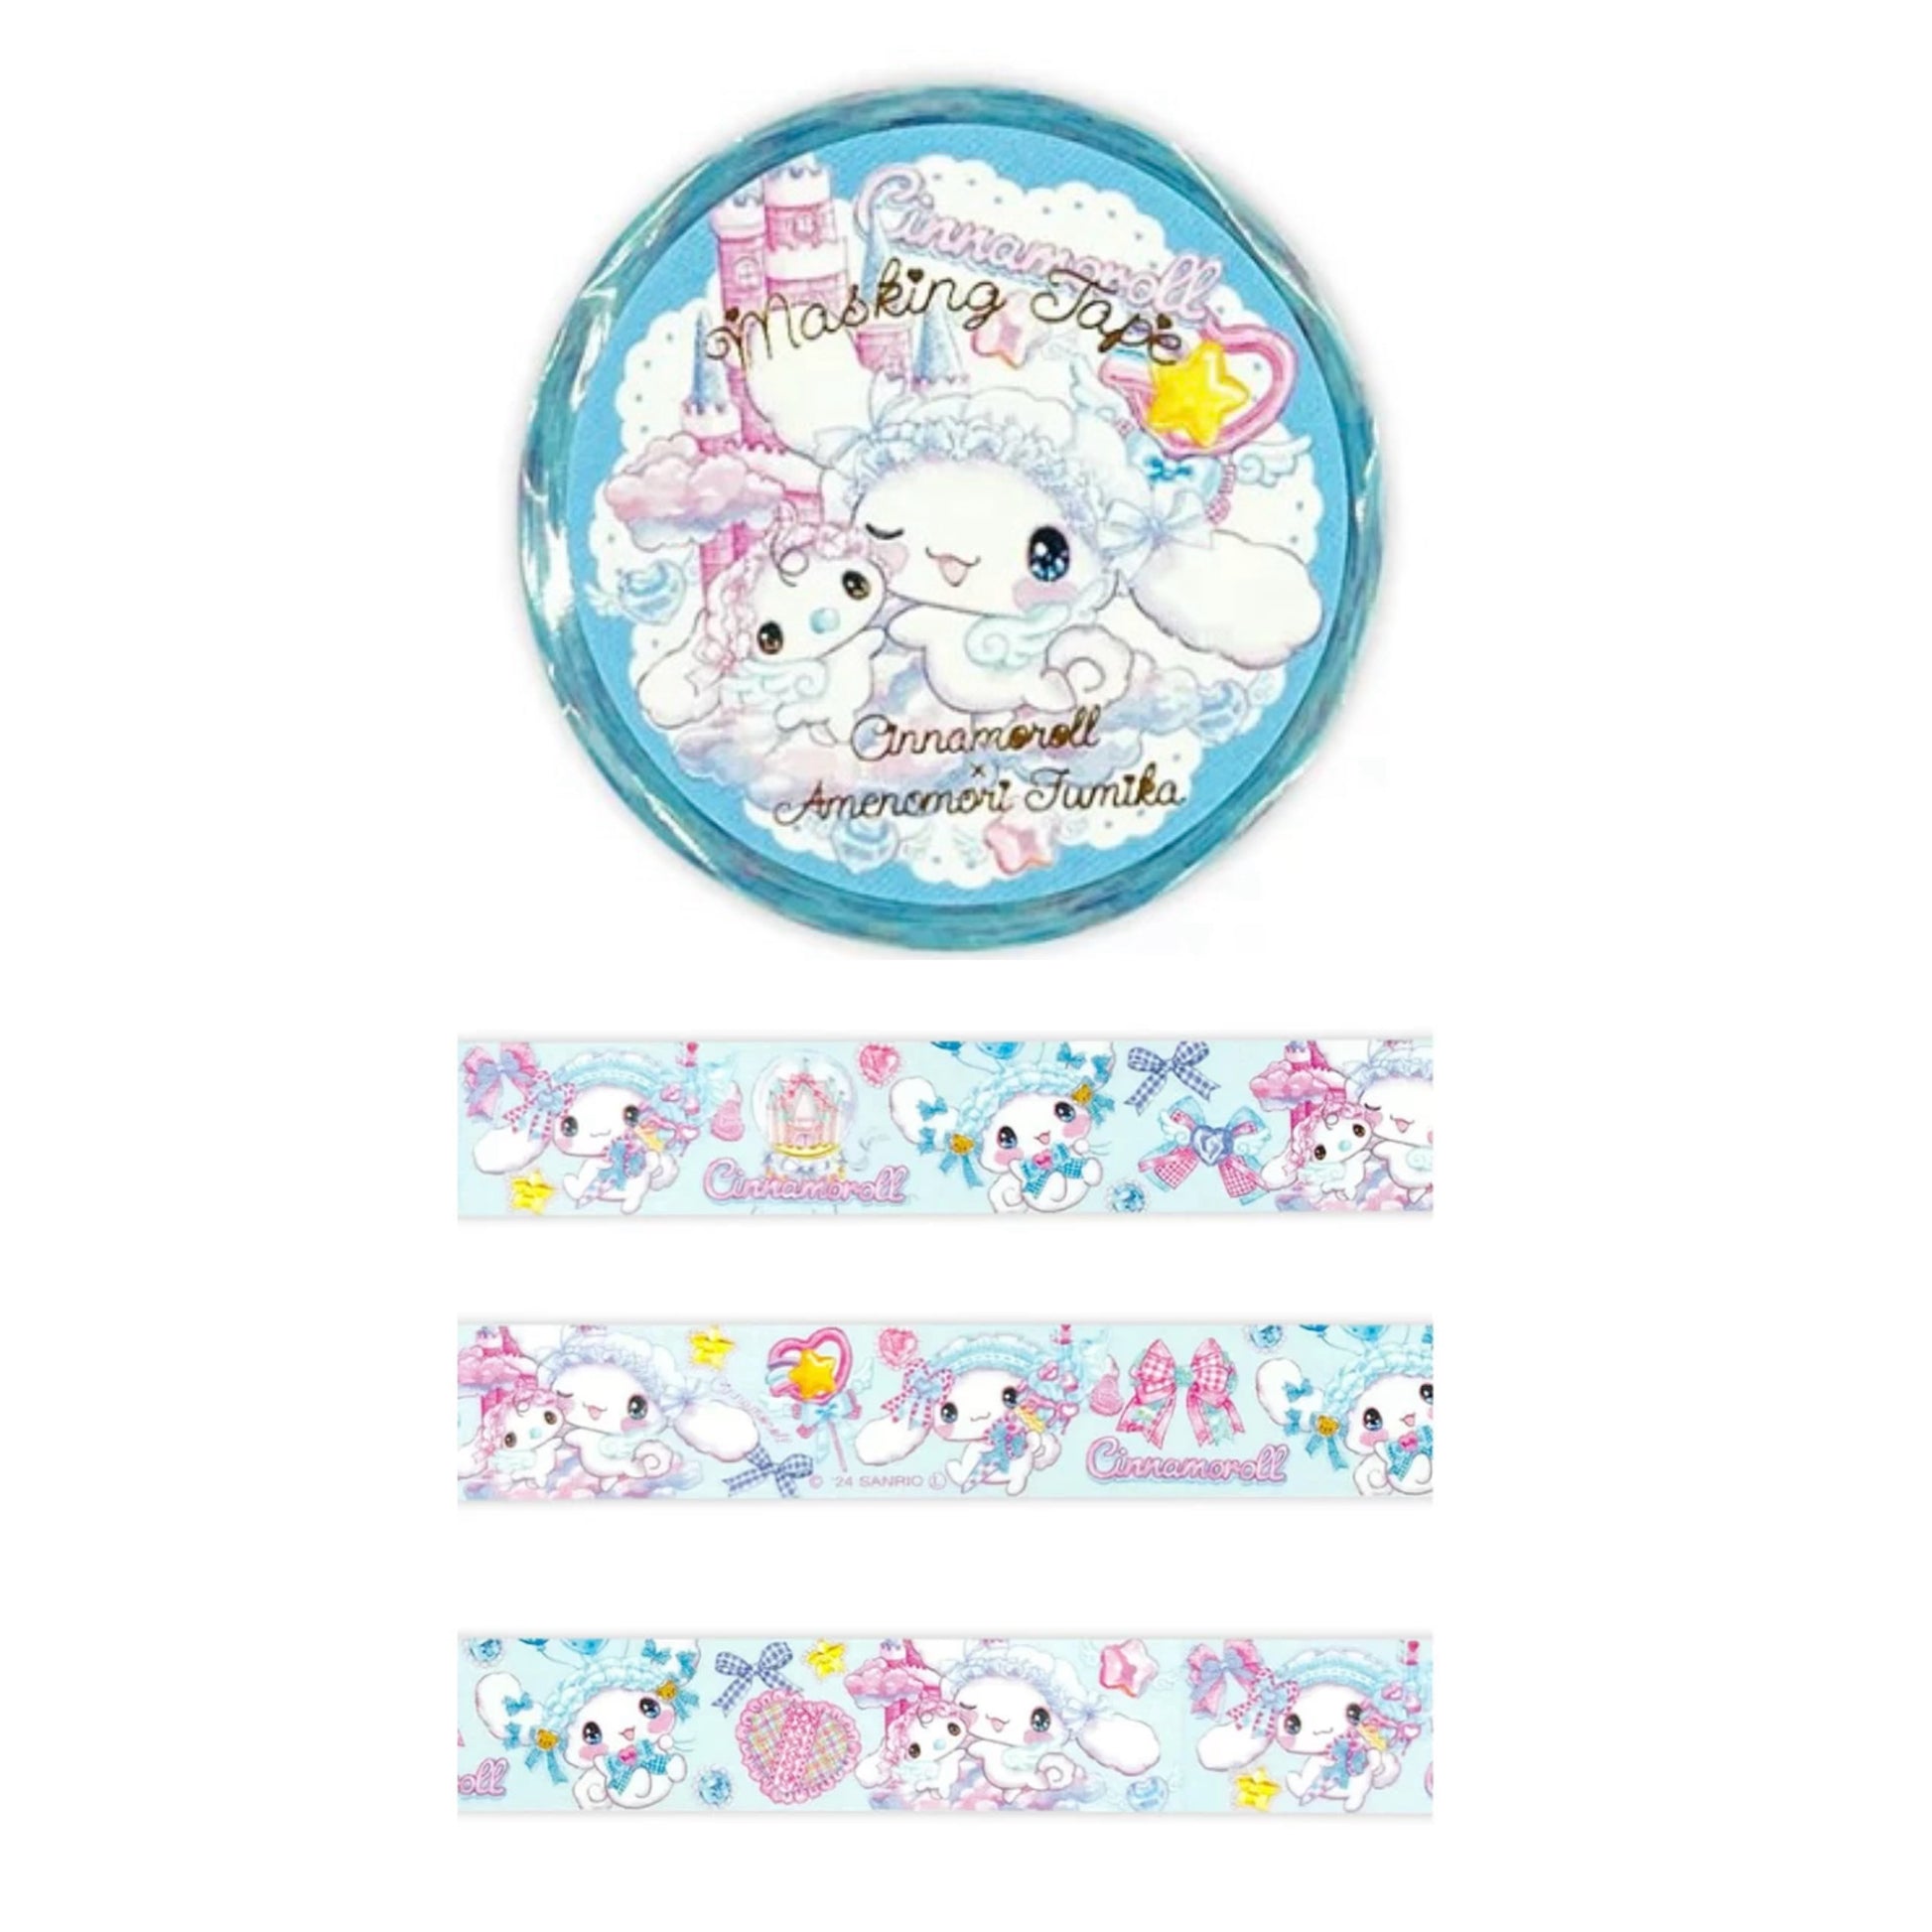 Sanrio x Amenomori Fumika - 紙膠帶 Masking Tape